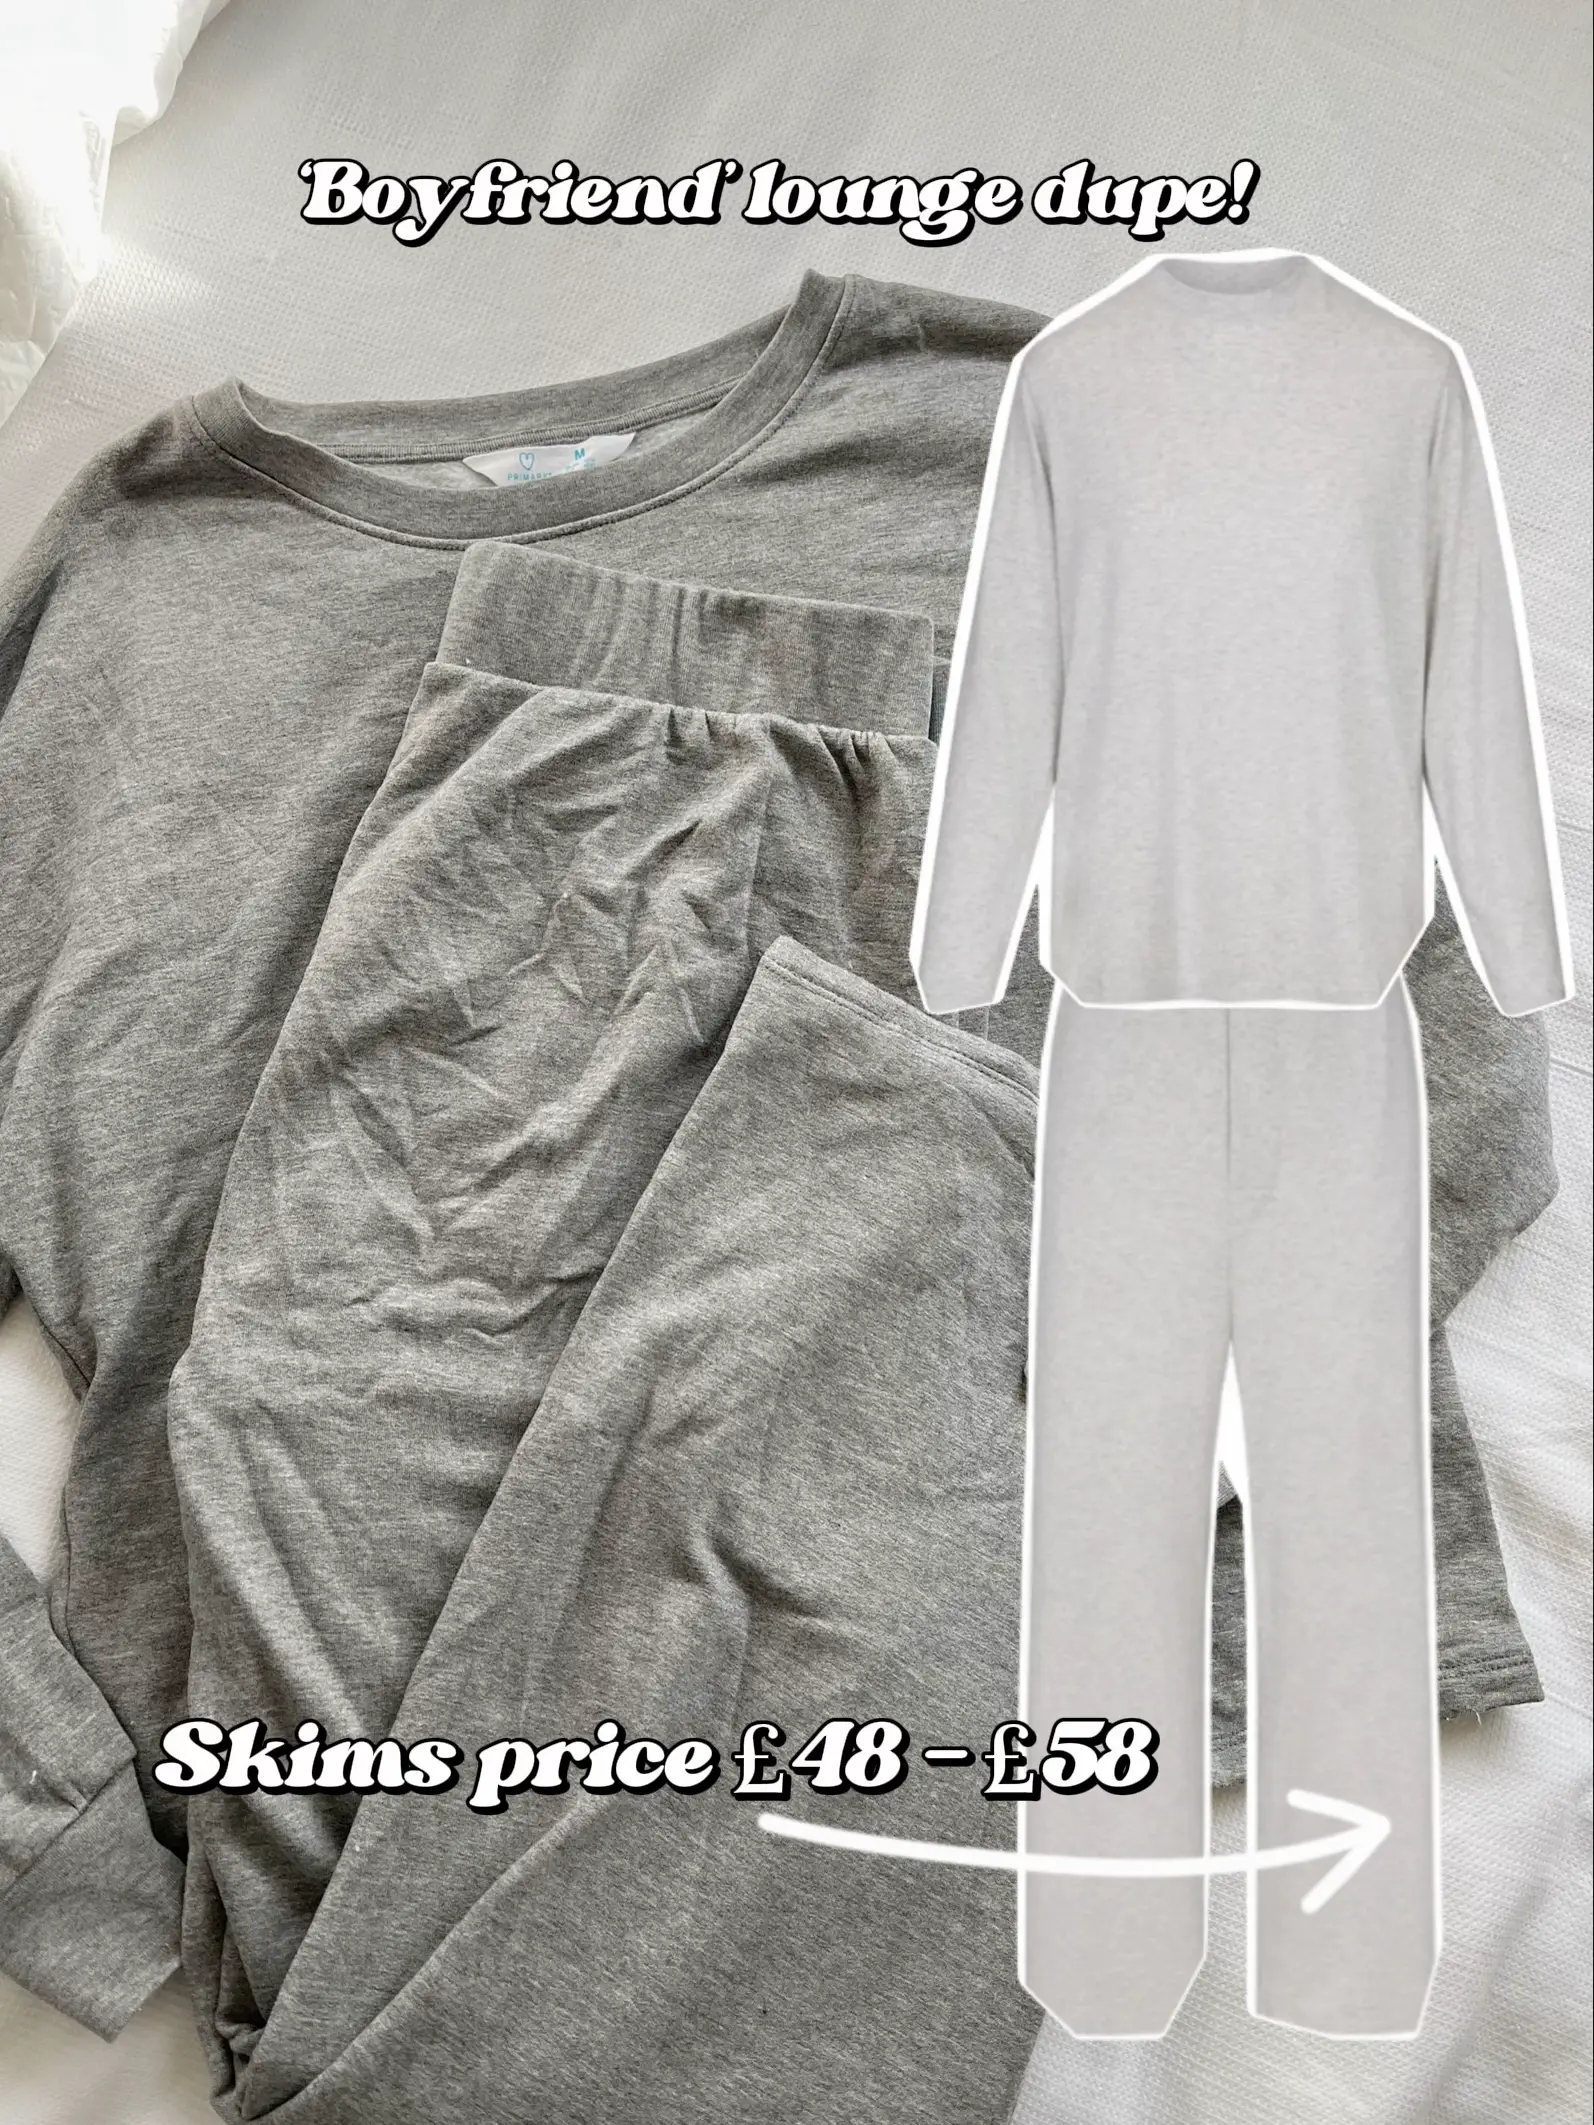 Women's Fleece Lounge Pajama Shorts - Colsie Blue M 1 ct